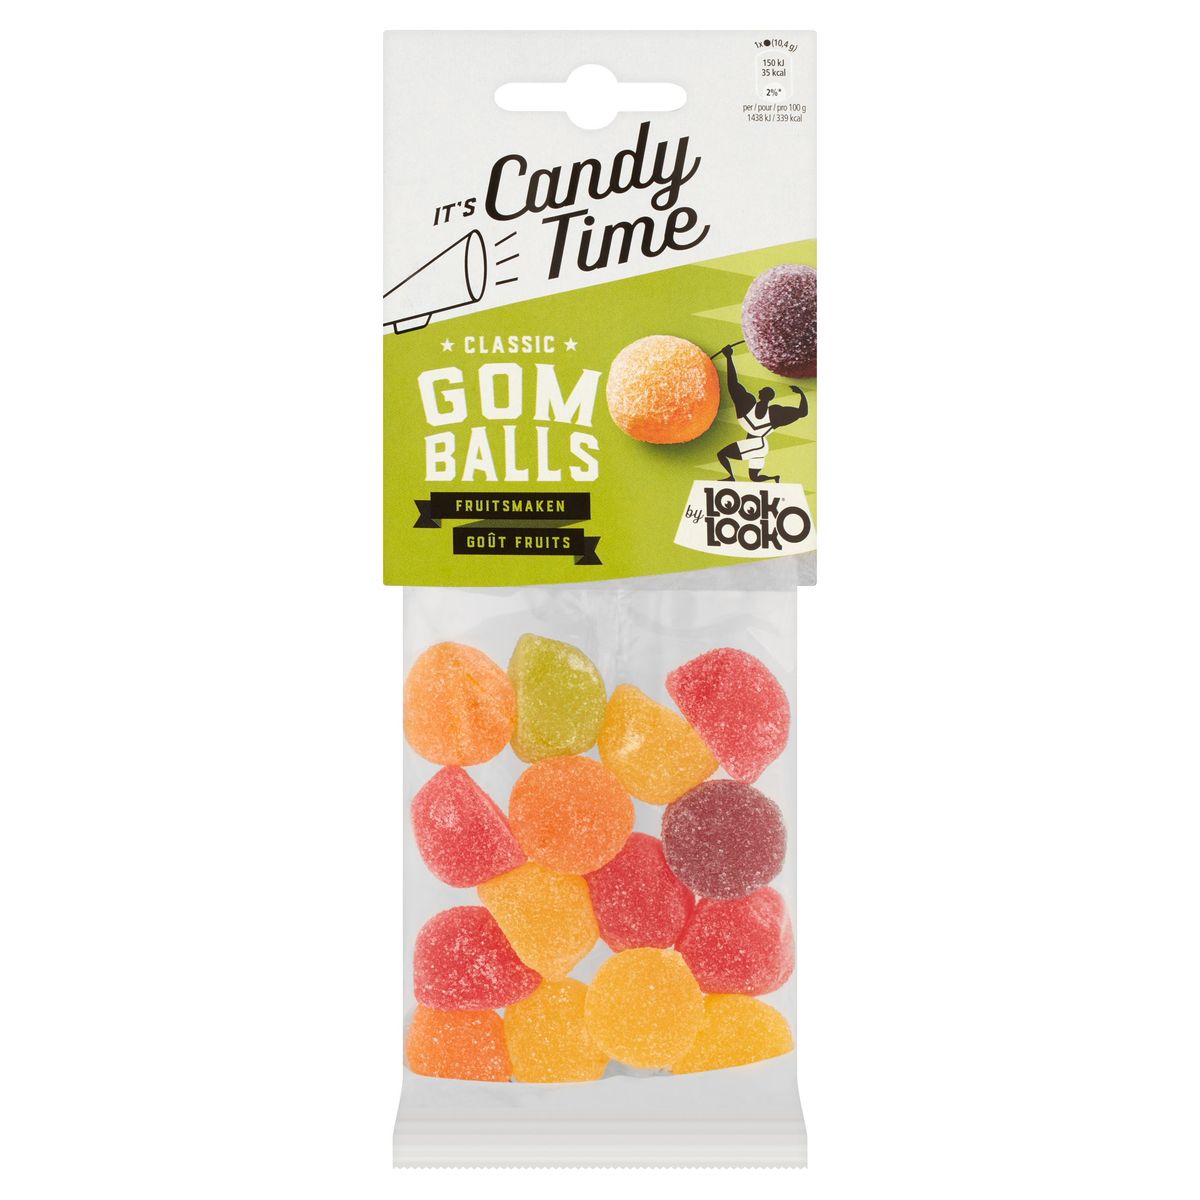 Candy Time Classic Gom Balls Fruitsmaken 160 g